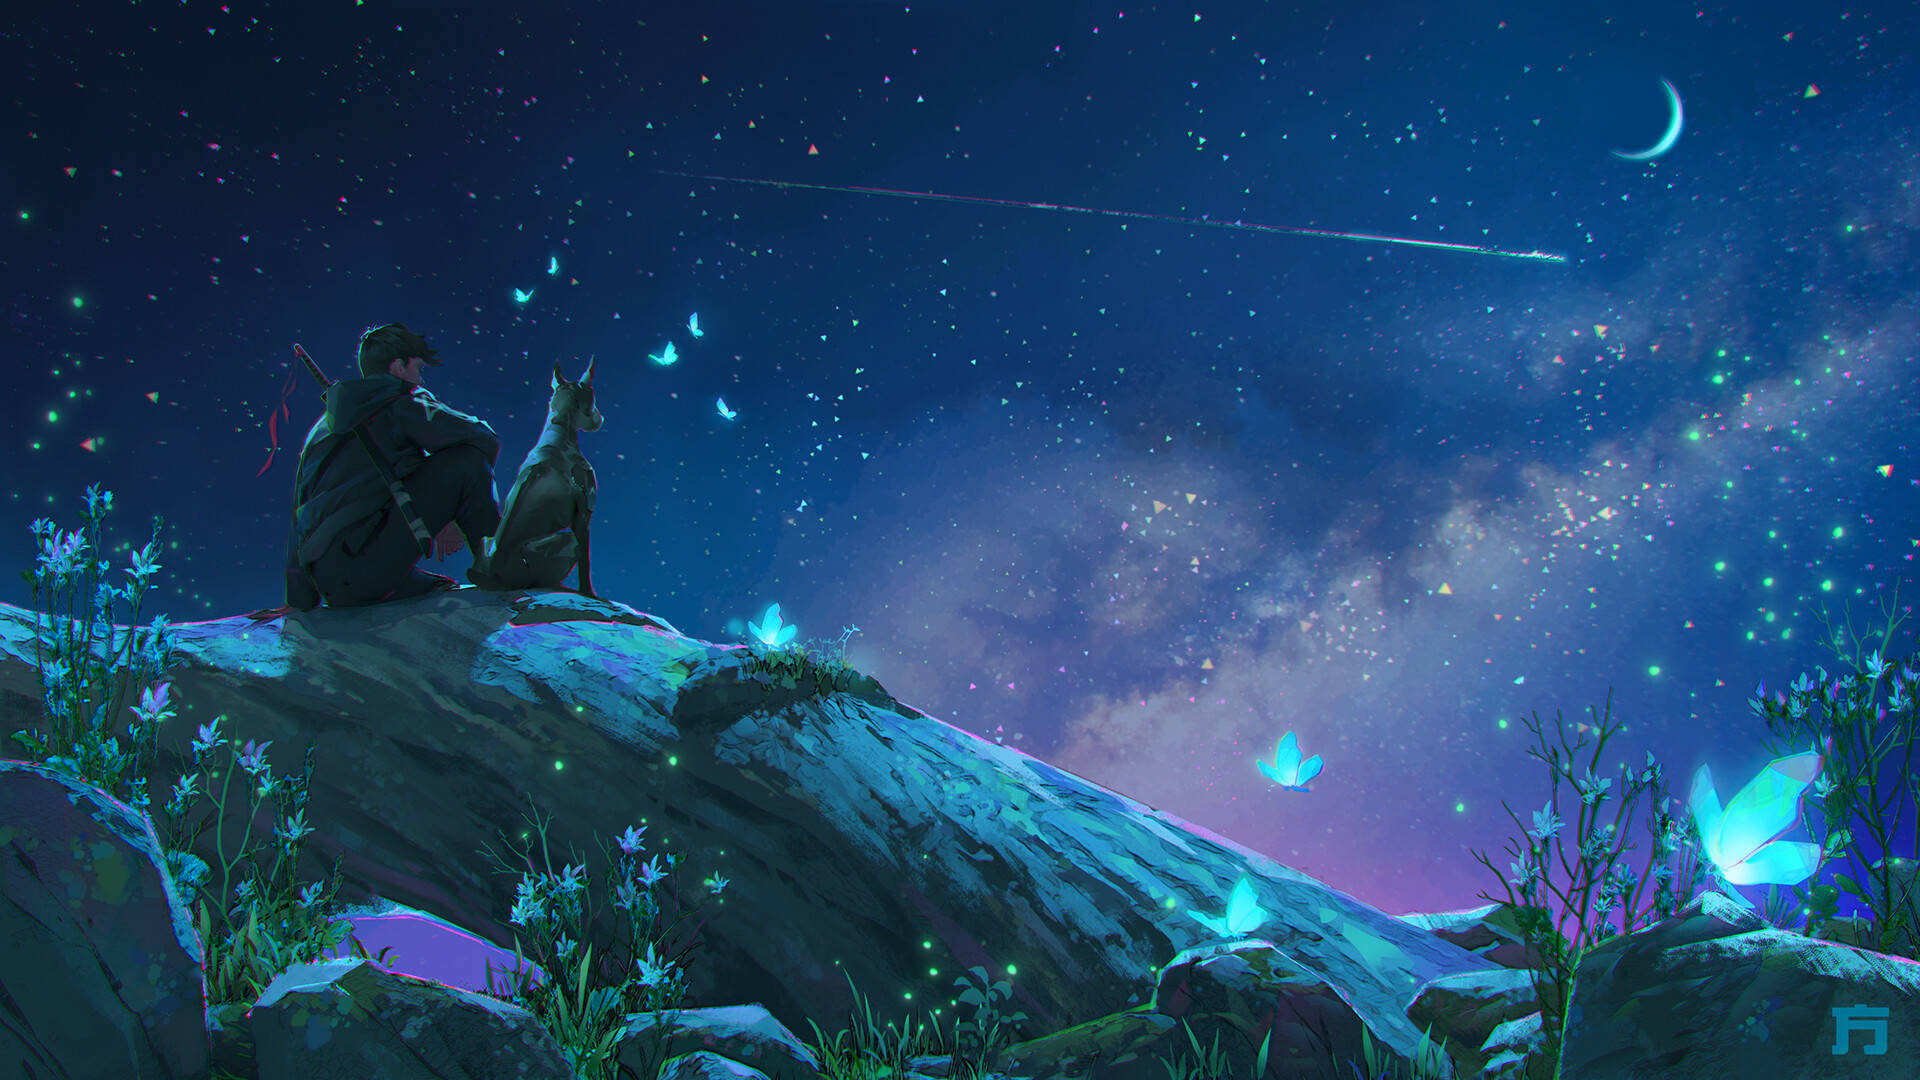 Under Night Sky Alone Boy Anime Background